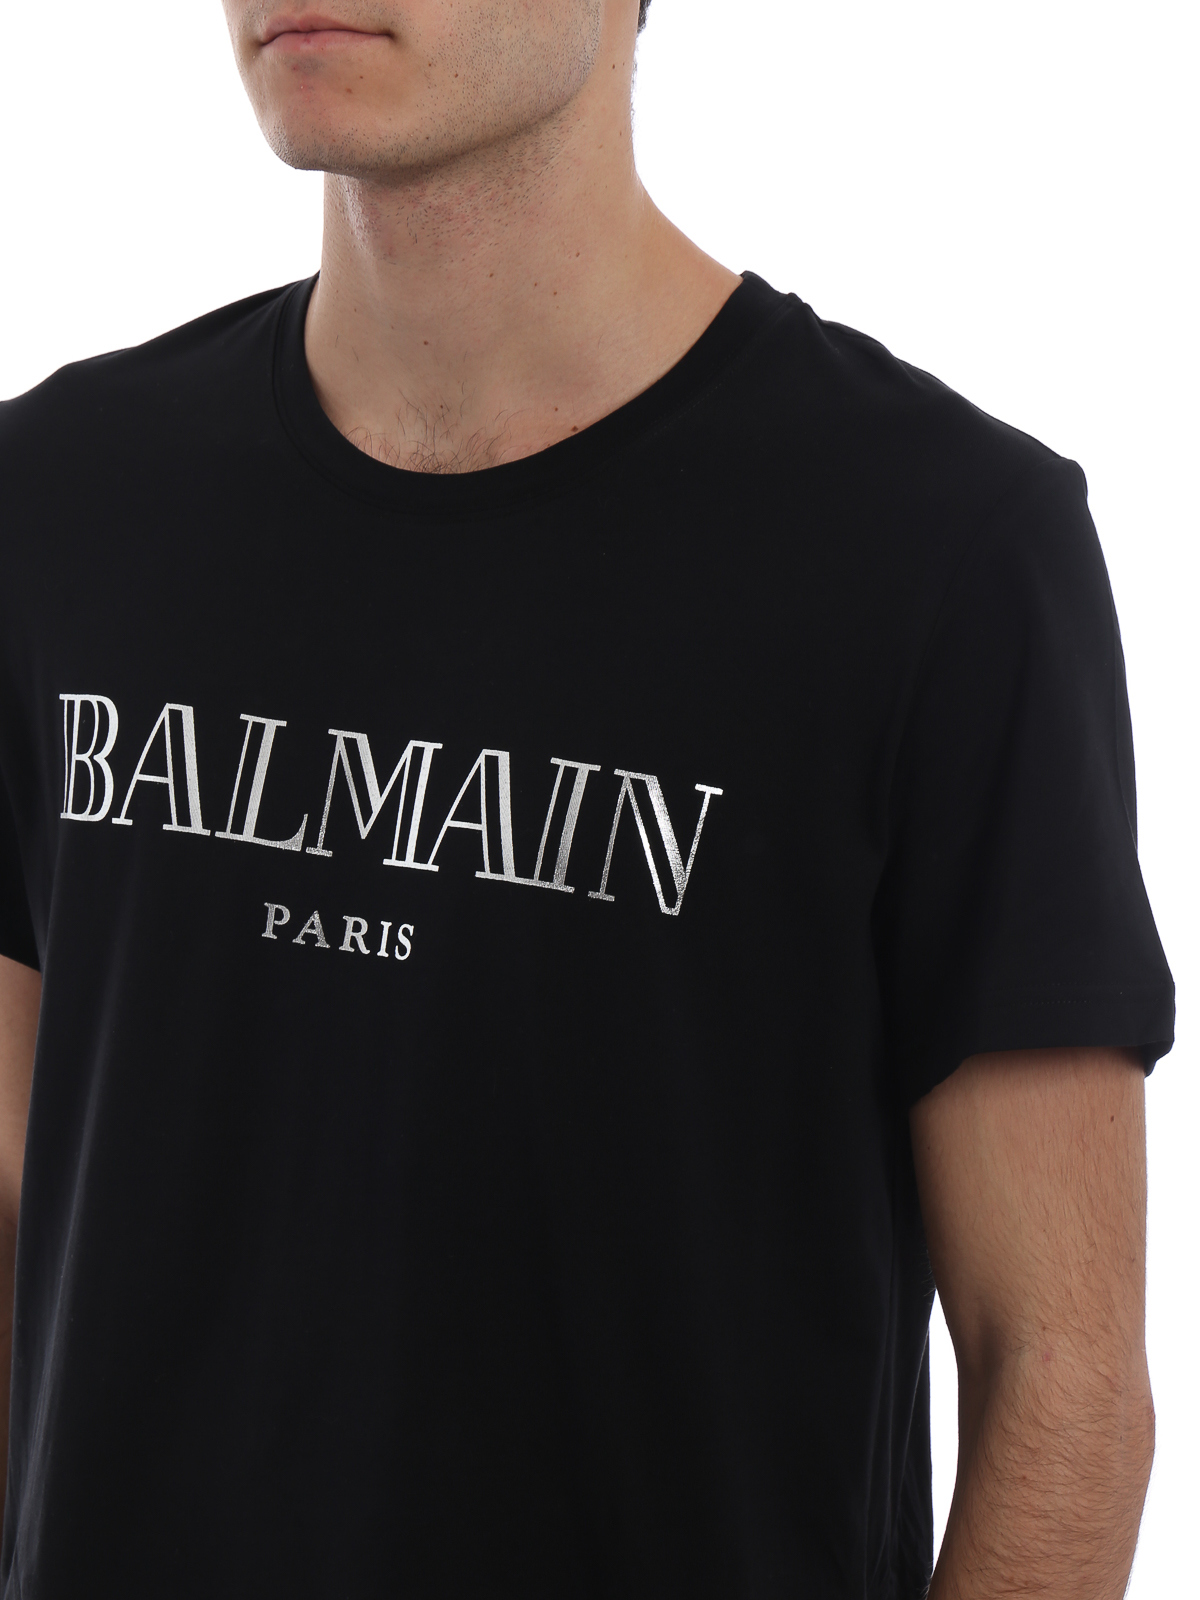 Balmain Shirt Black Store, 57% OFF ...